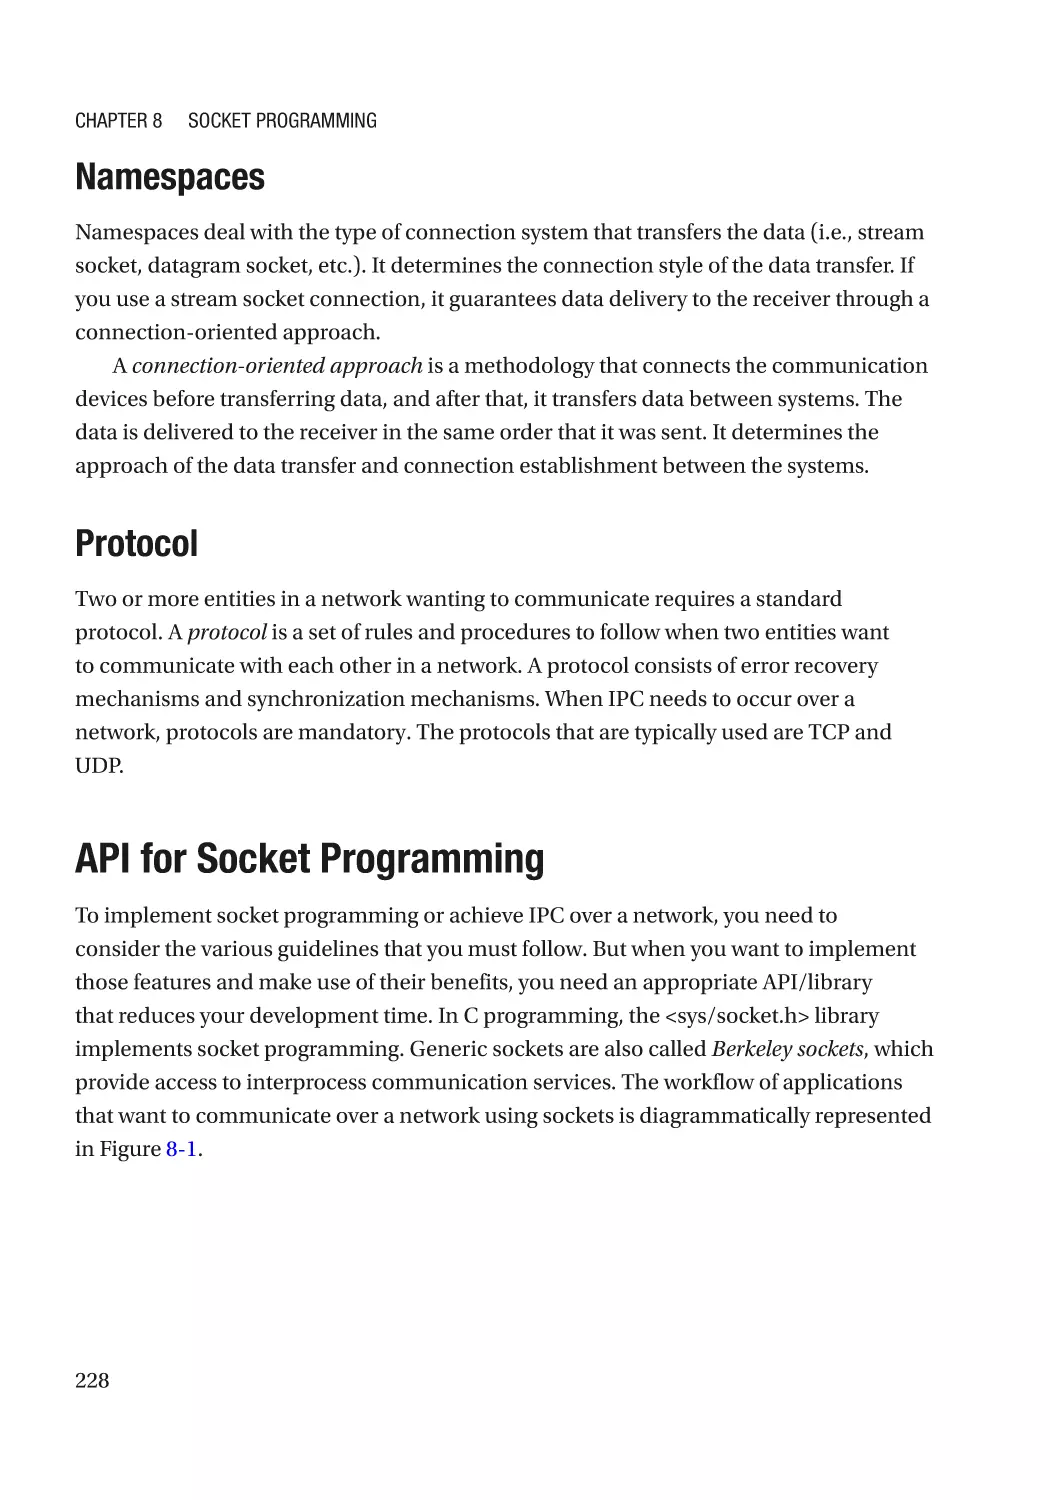 Namespaces
Protocol
API for Socket Programming